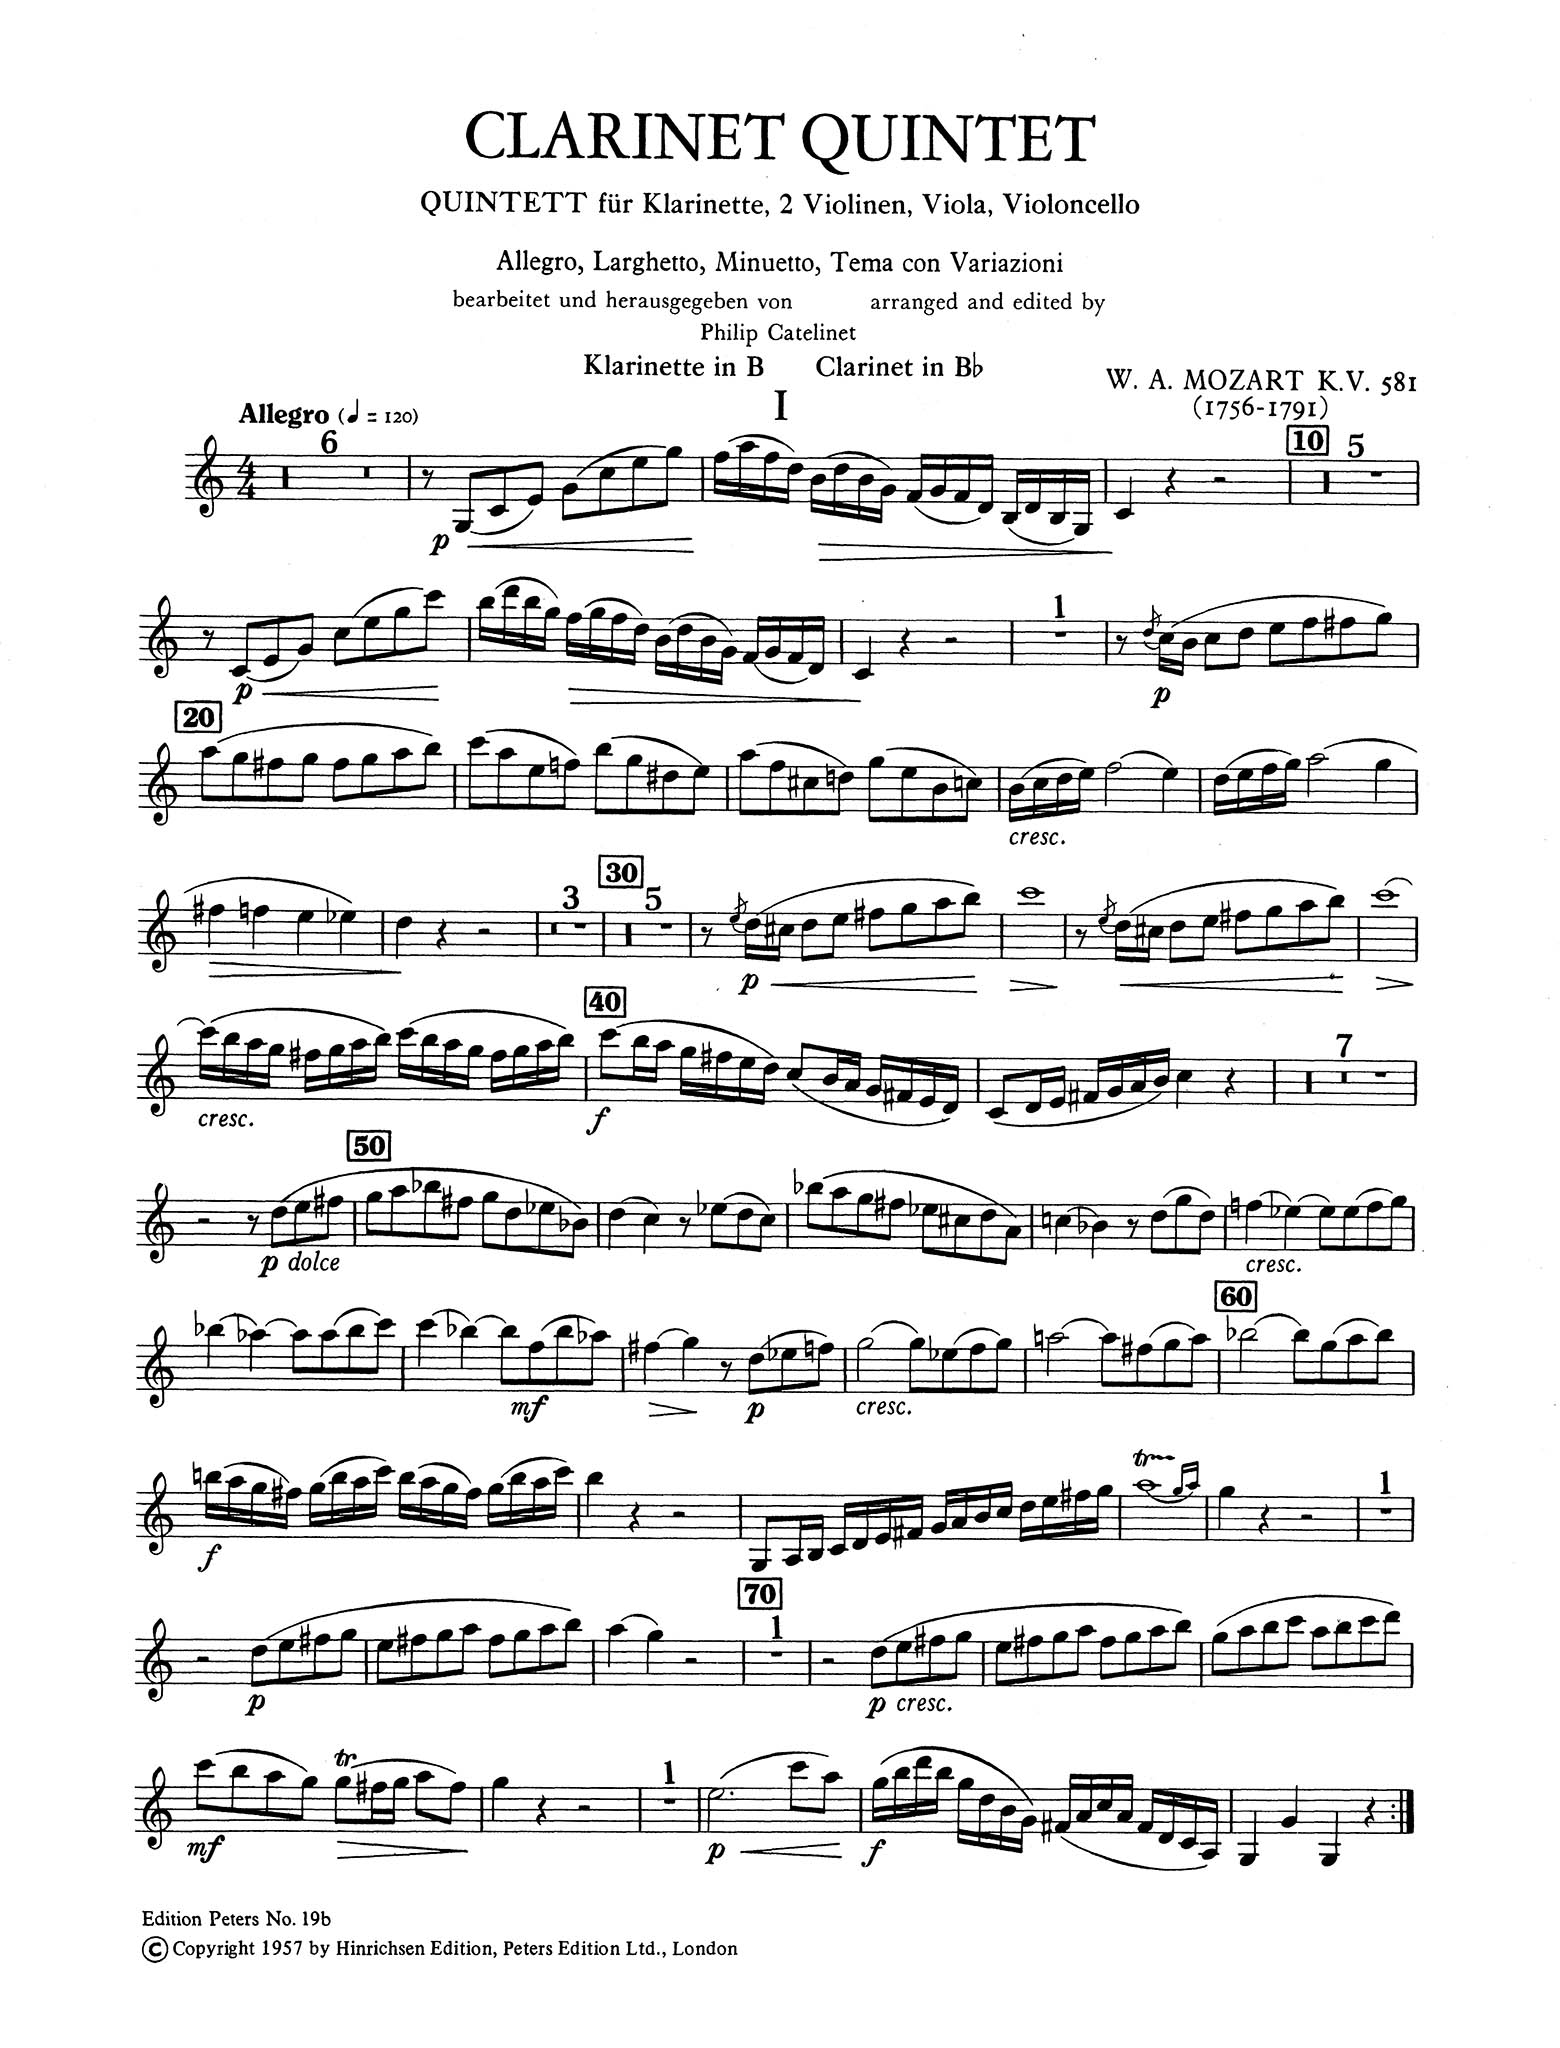 Clarinet Quintet, K. 581 Clarinet part